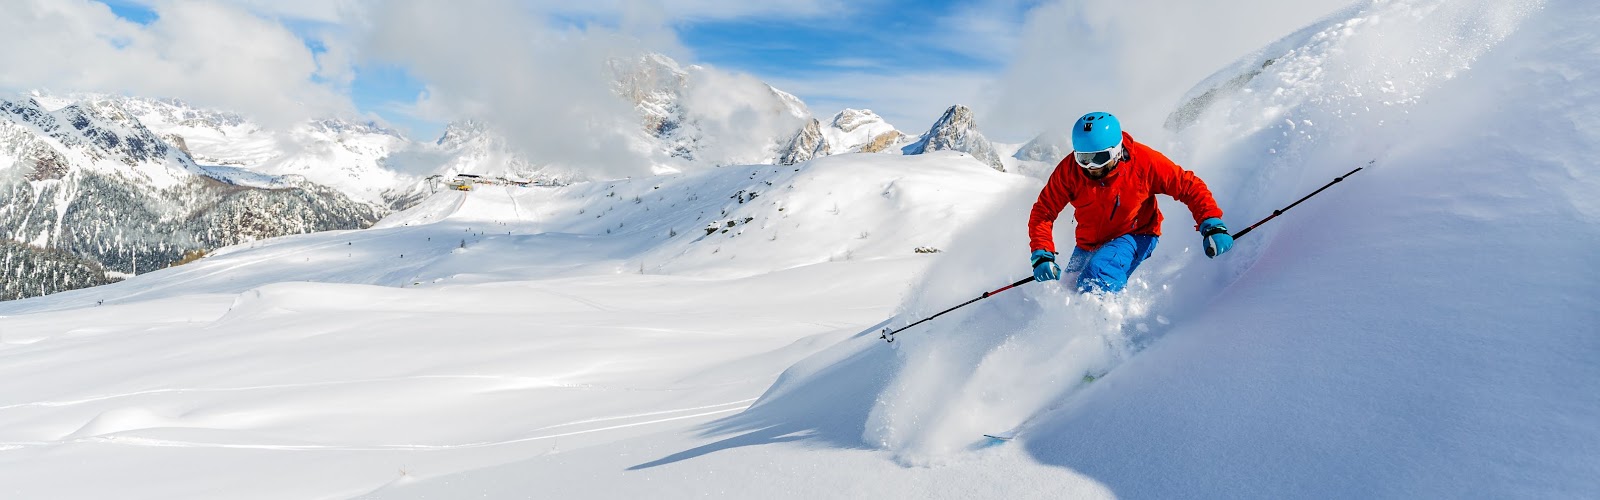 10 Reasons to Ski Bulgaria on the 9th February 2019